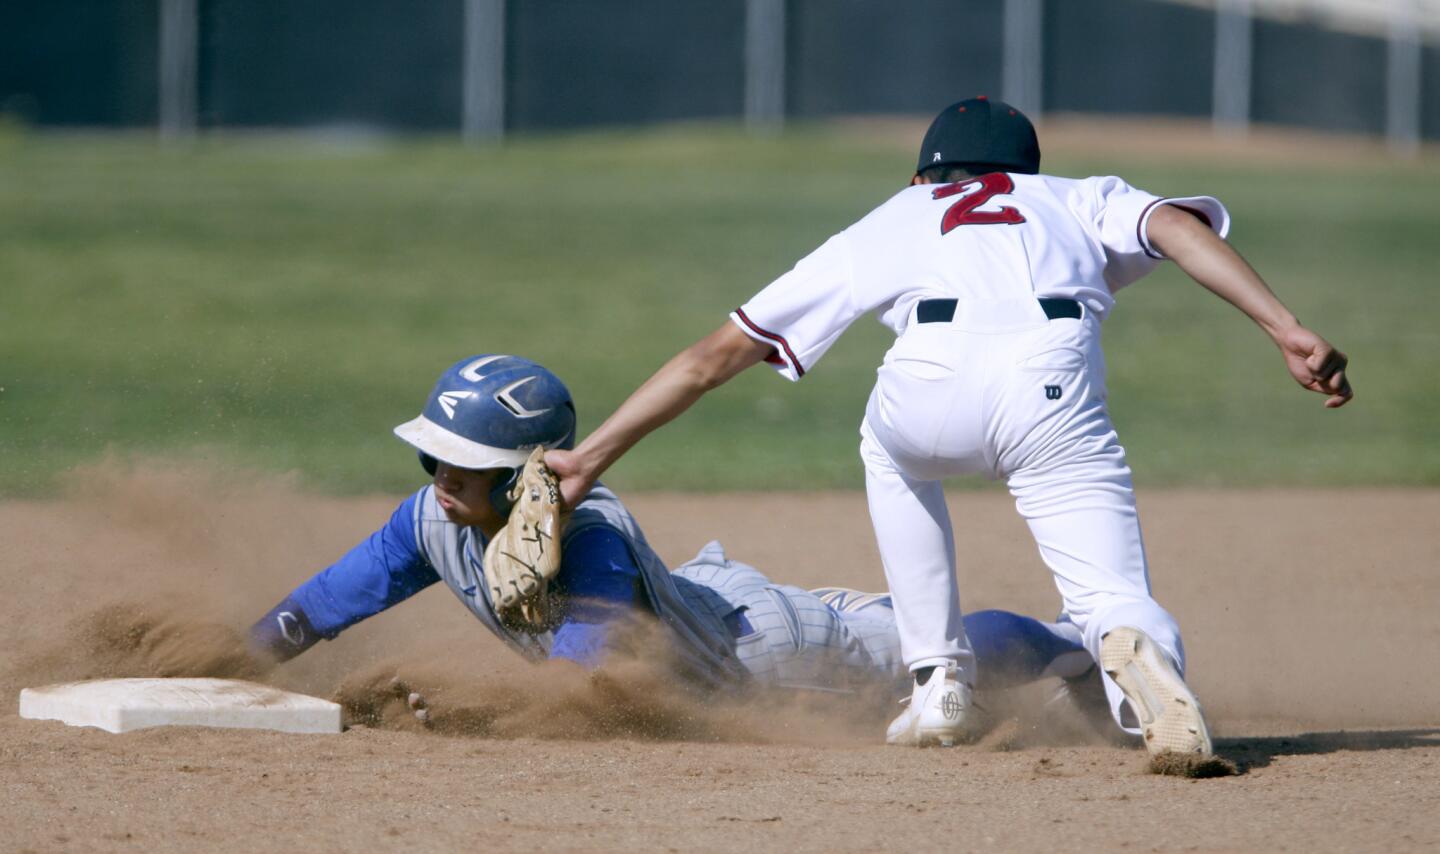 Photo Gallery: Burbank High School baseball vs. Glendale High School